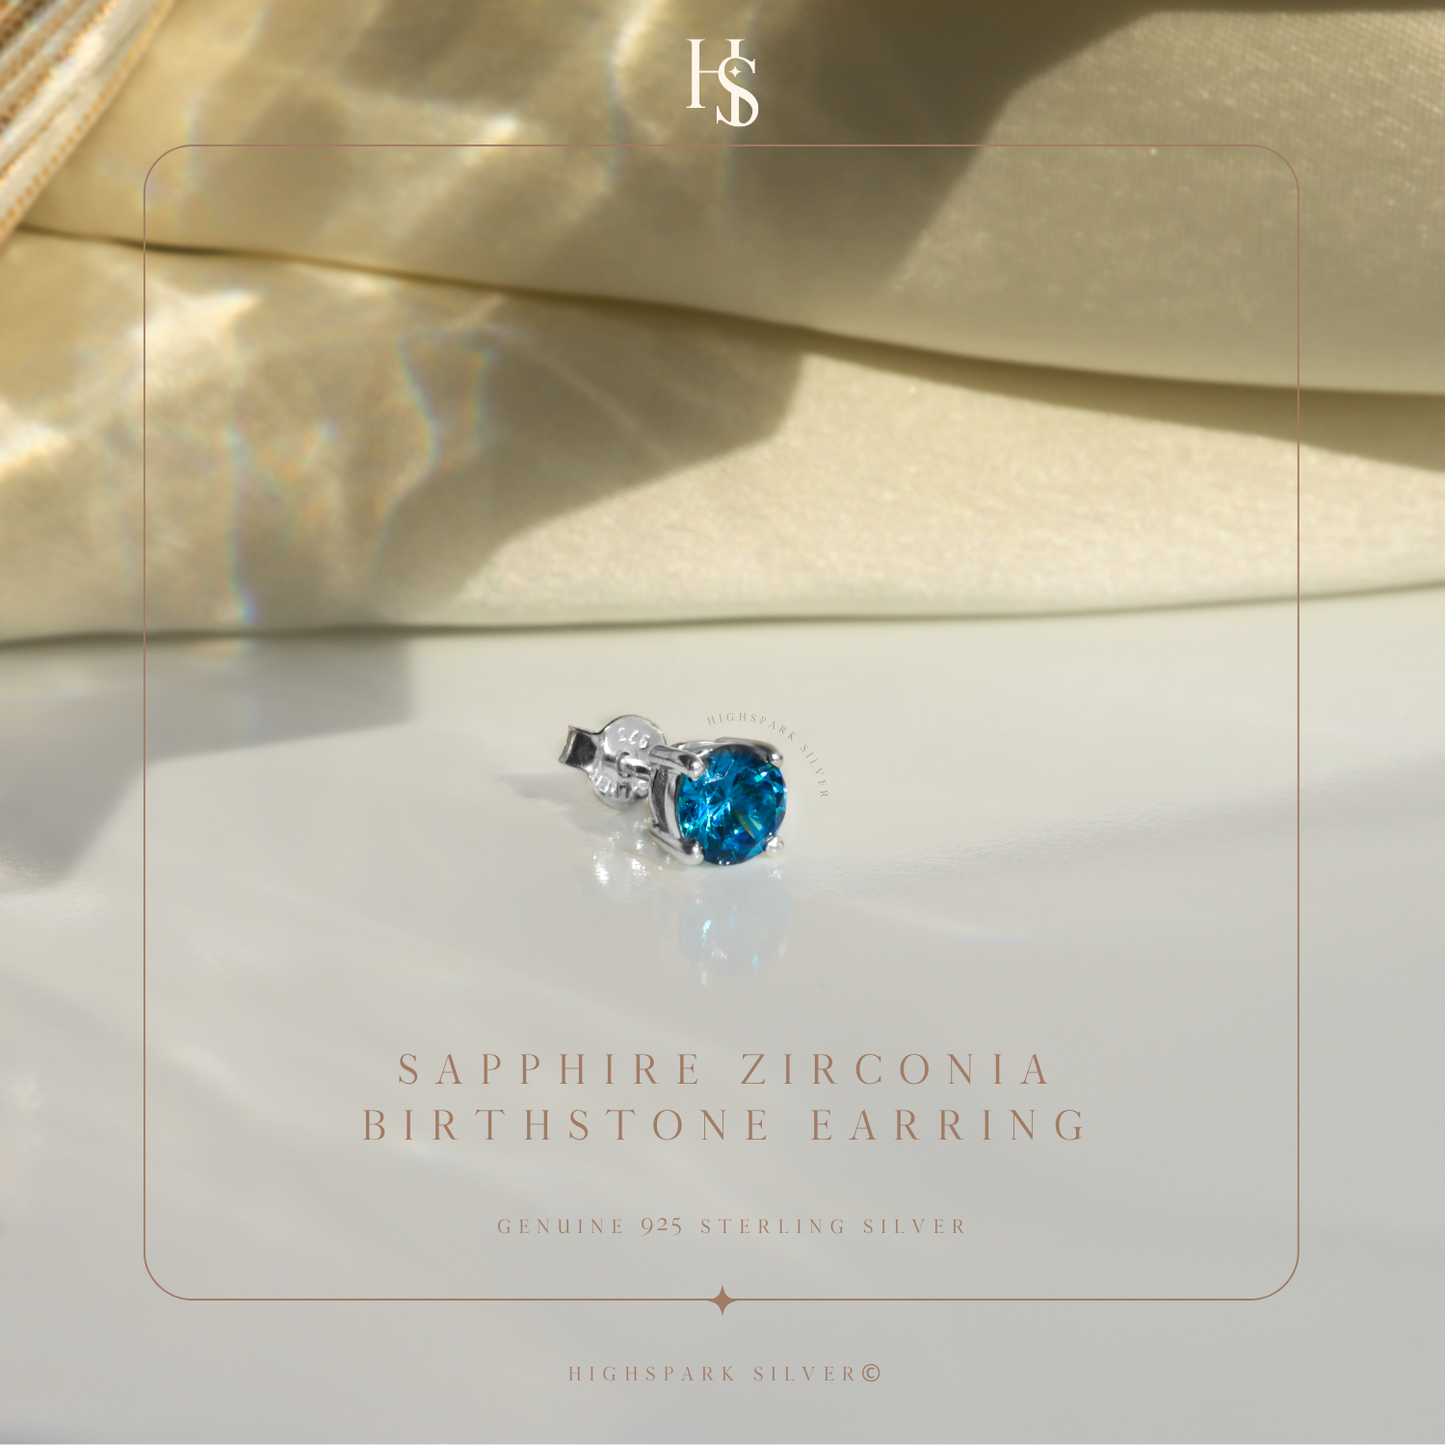 Men's Solitaire Stud Earring - 925 Silver - Birthstone September Sapphire Zirconia - 1 Piece